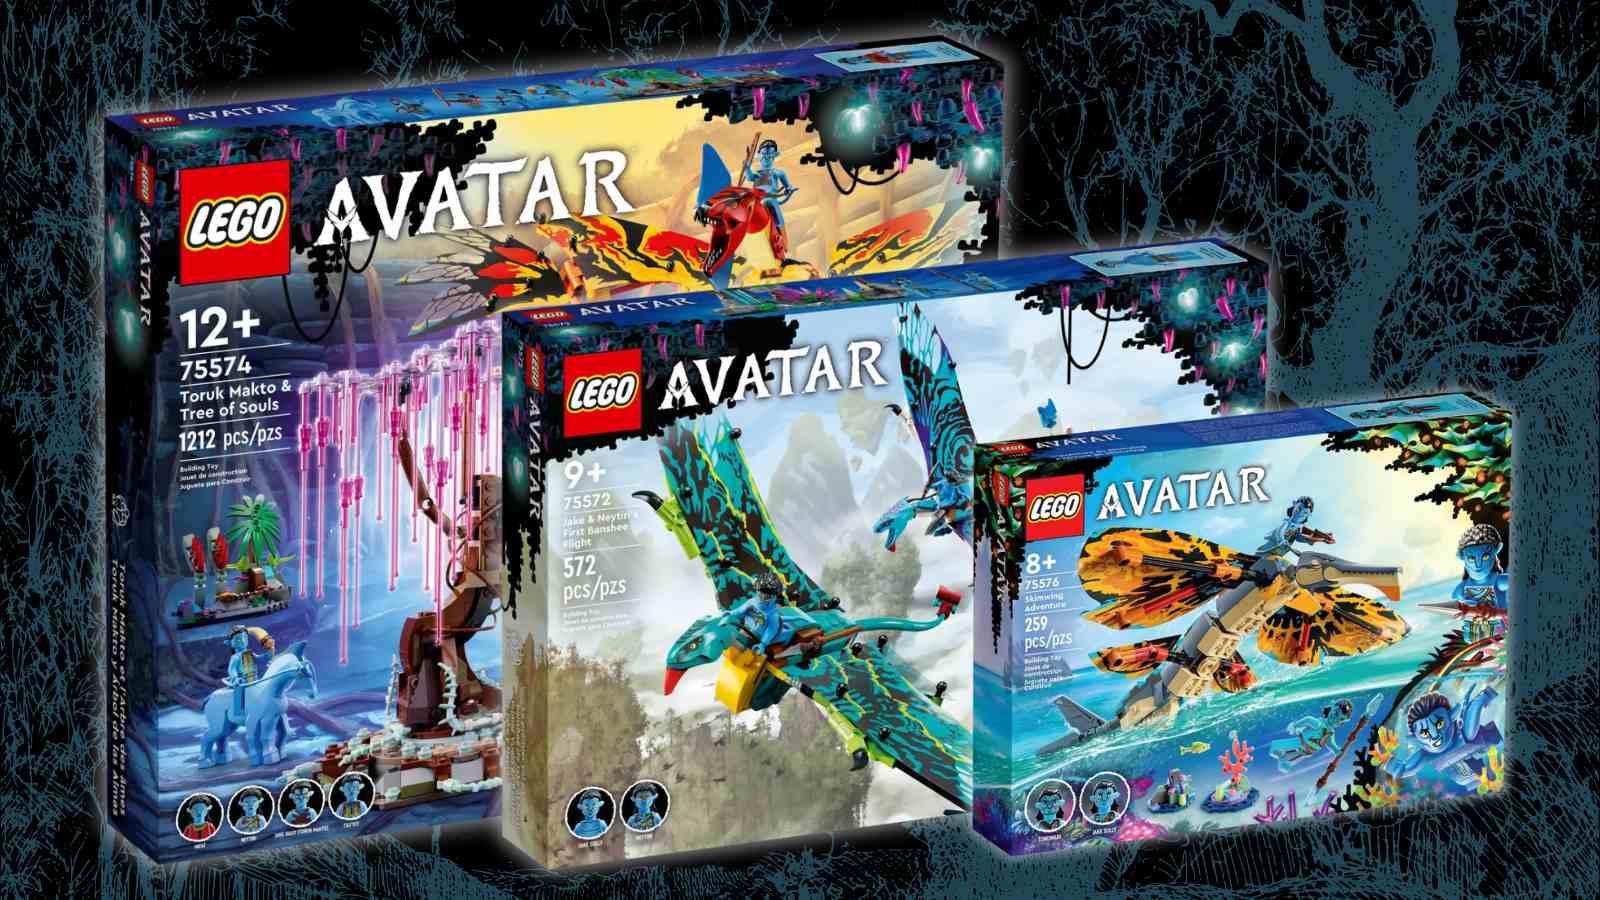 Three of the retiring LEGO Avatar sets